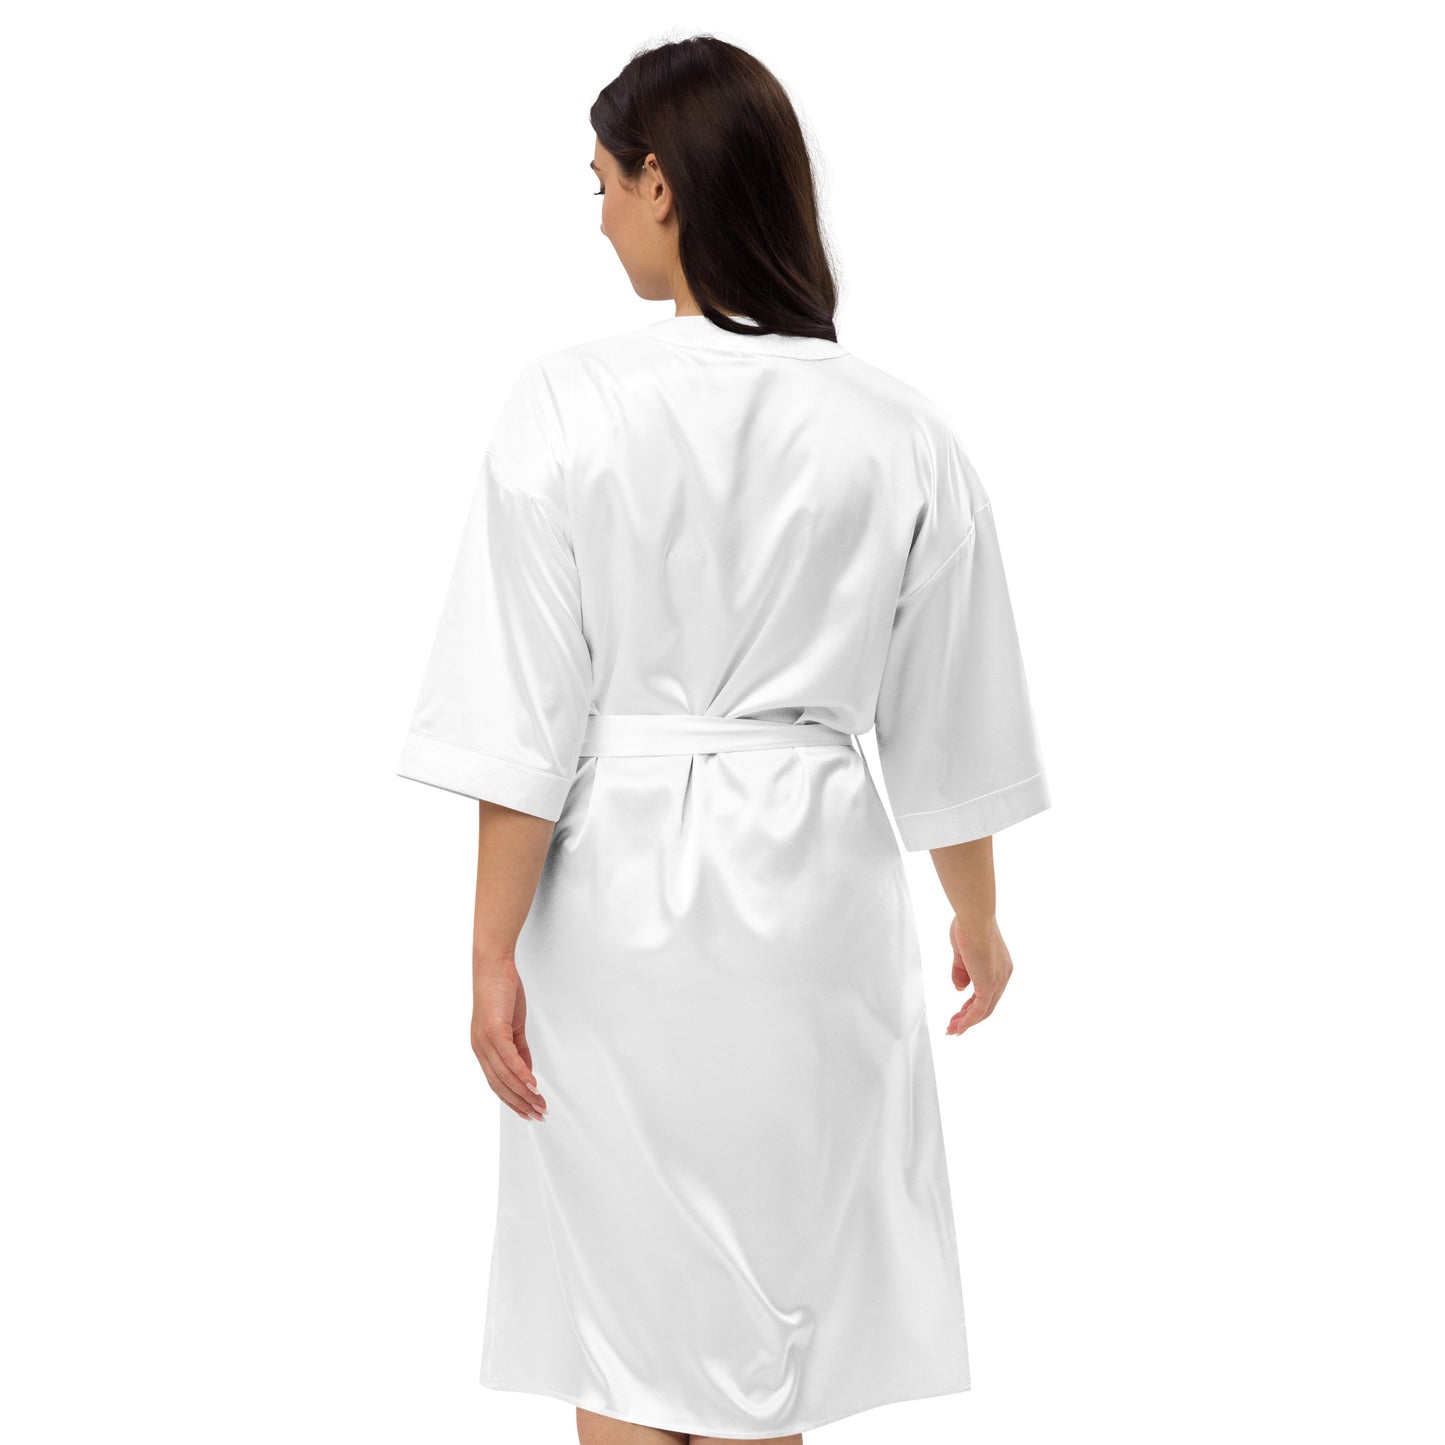 Satin robe - Everyone loves a shortgirl